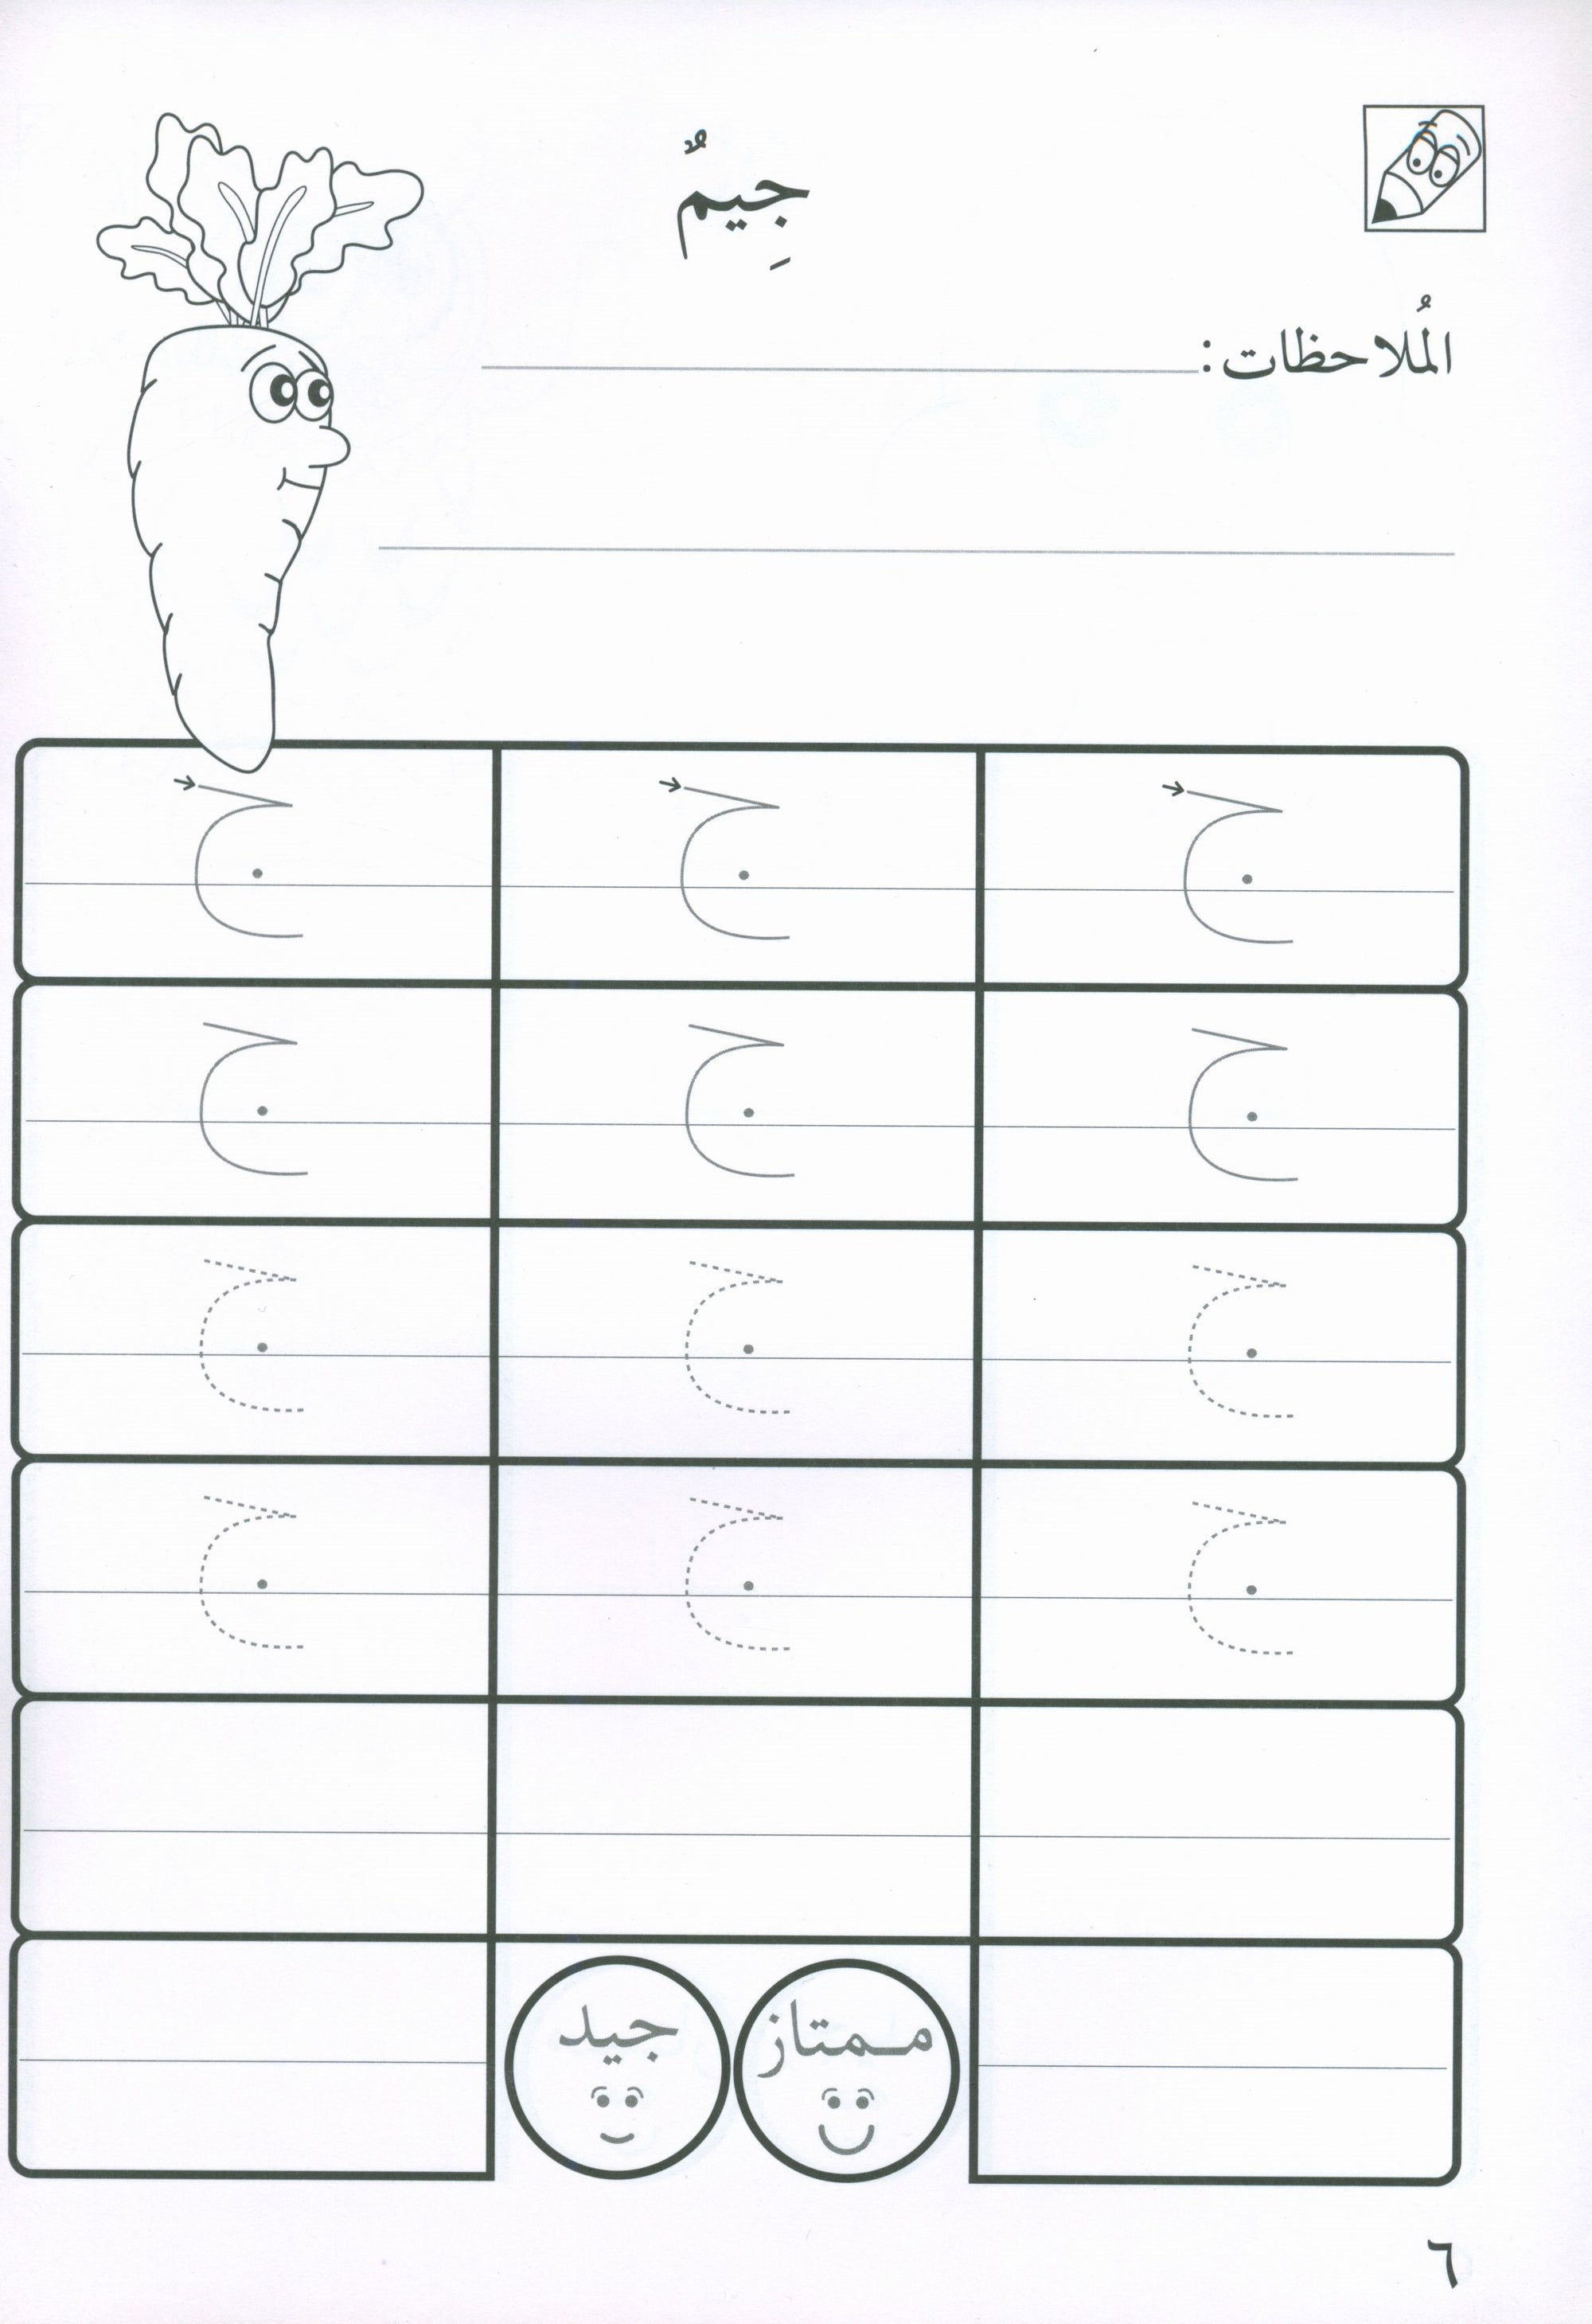 Preparing for School - My Arabic Letters Workbook  الاستعداد للمدرسة - أحرفي العربية كتاب التمرينات